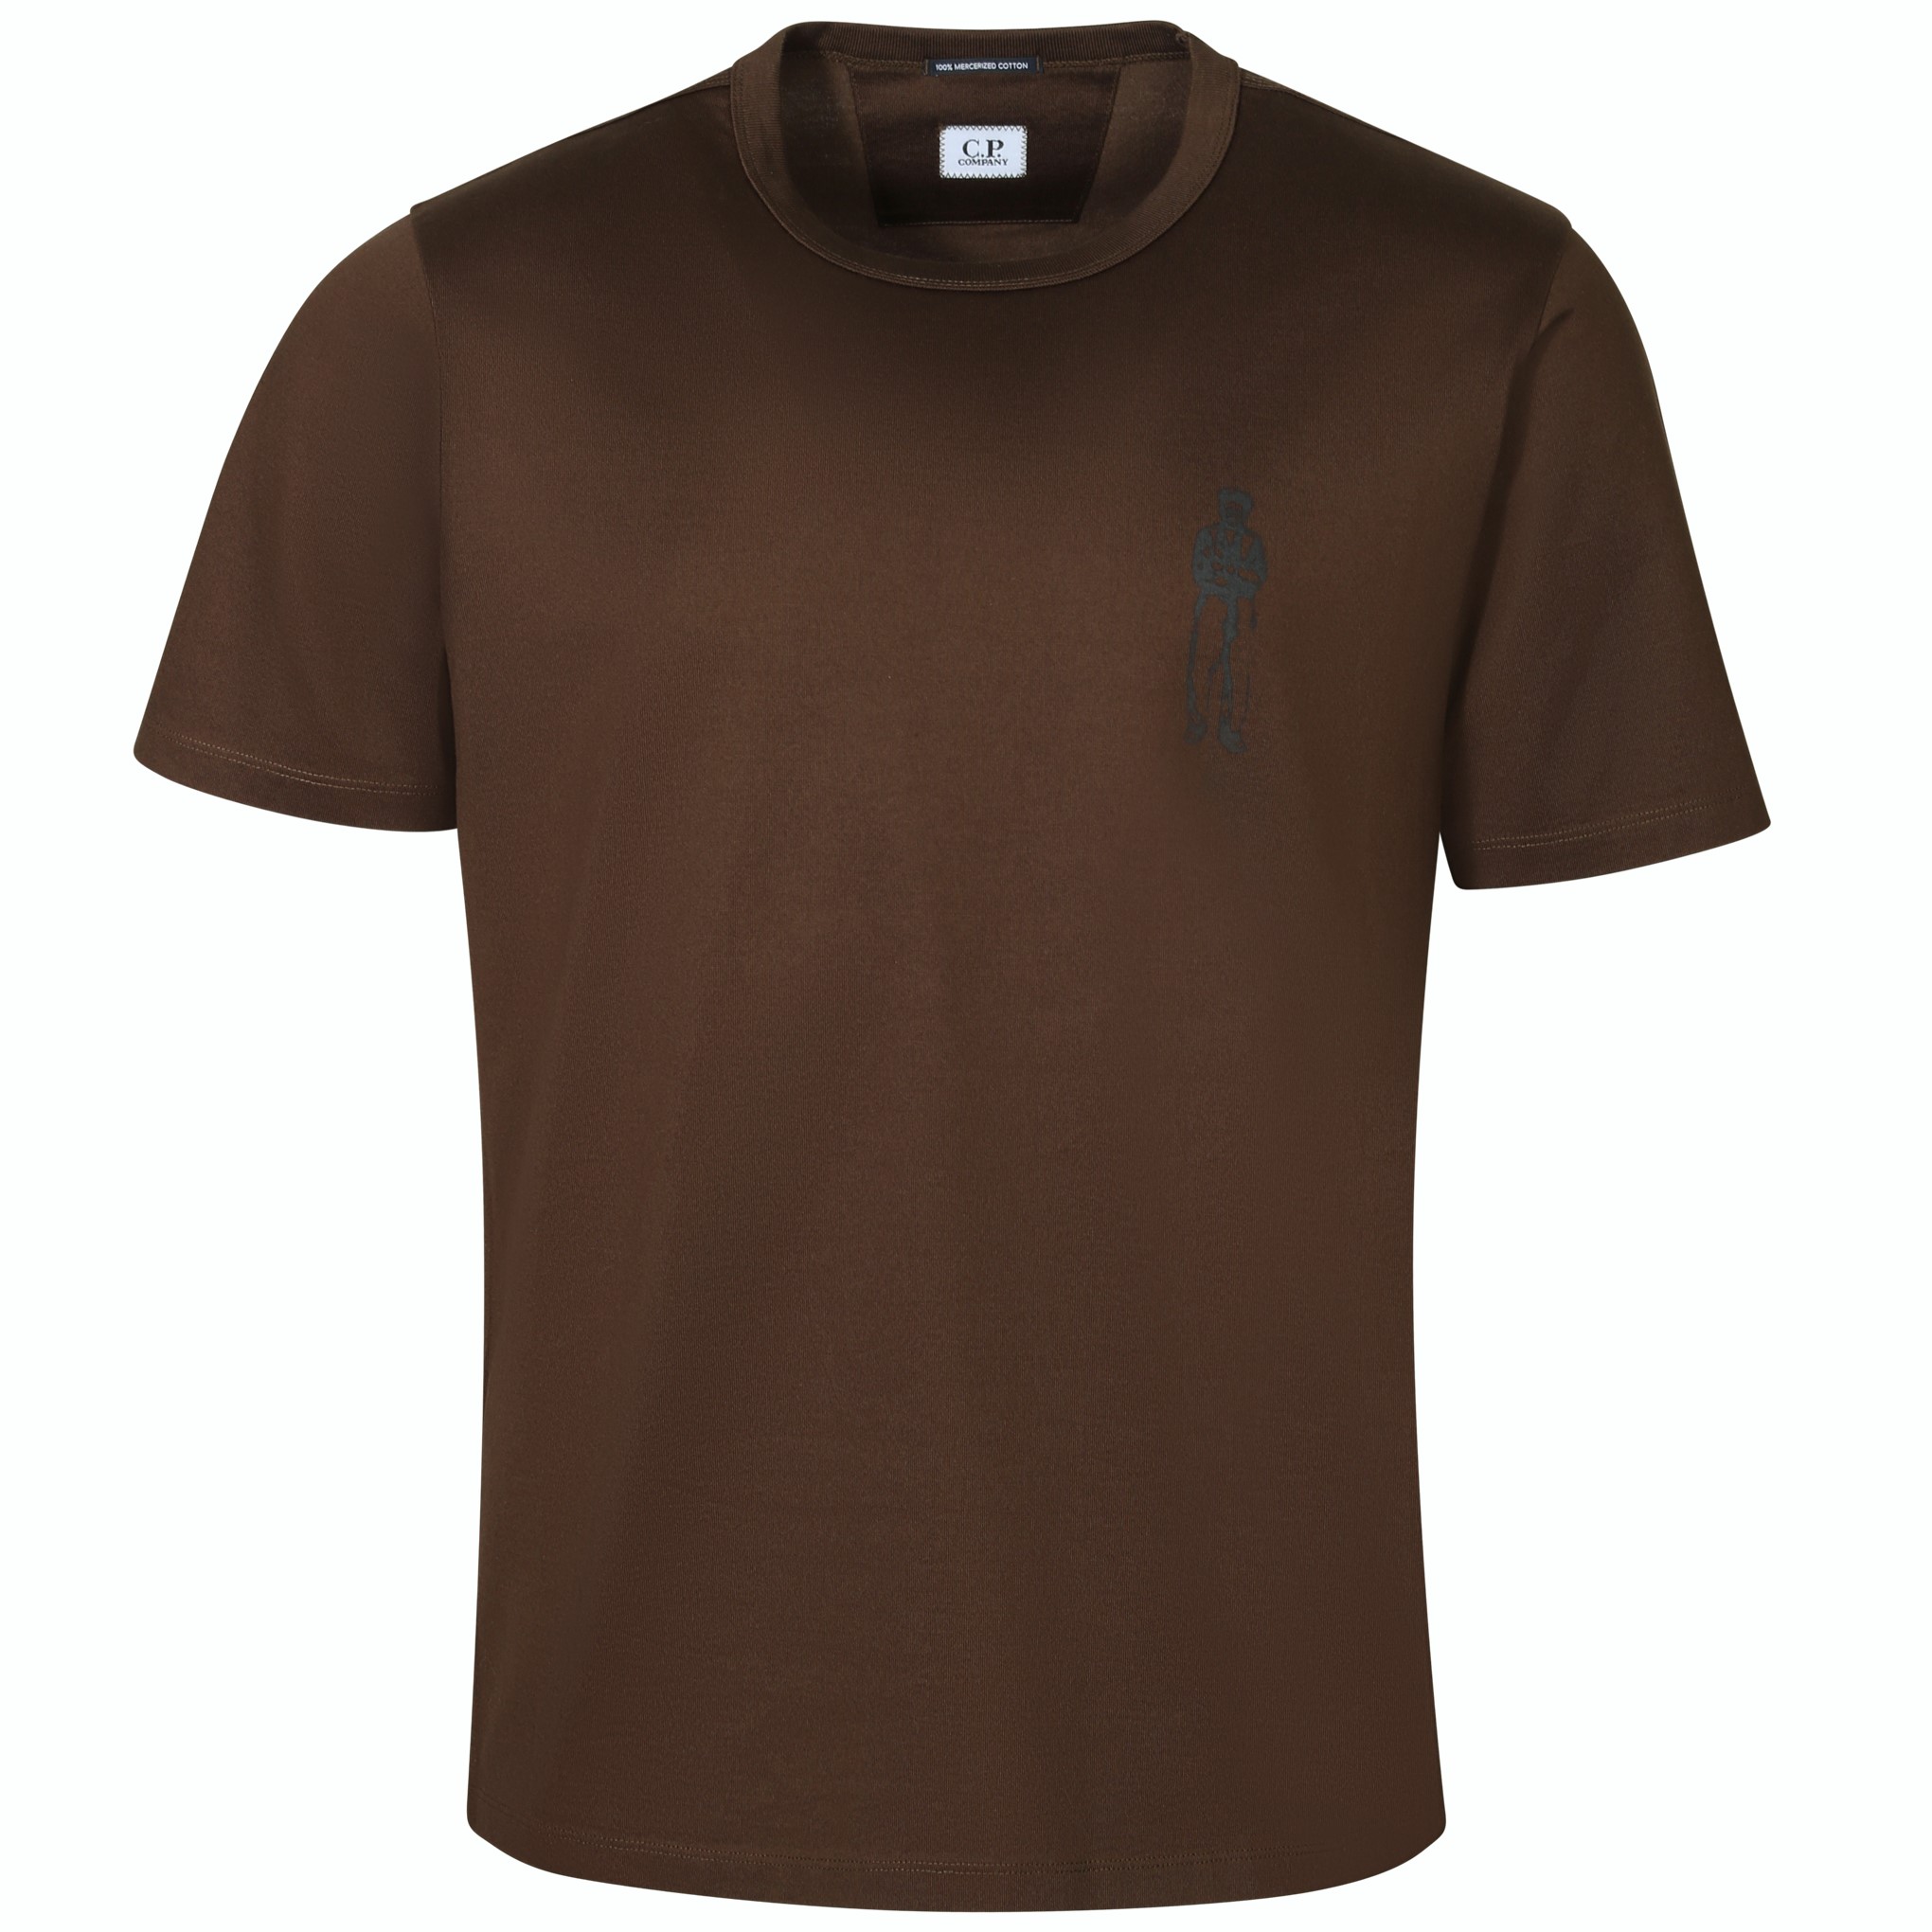 C.P. COMPANY T-Shirt in Dark Olive S